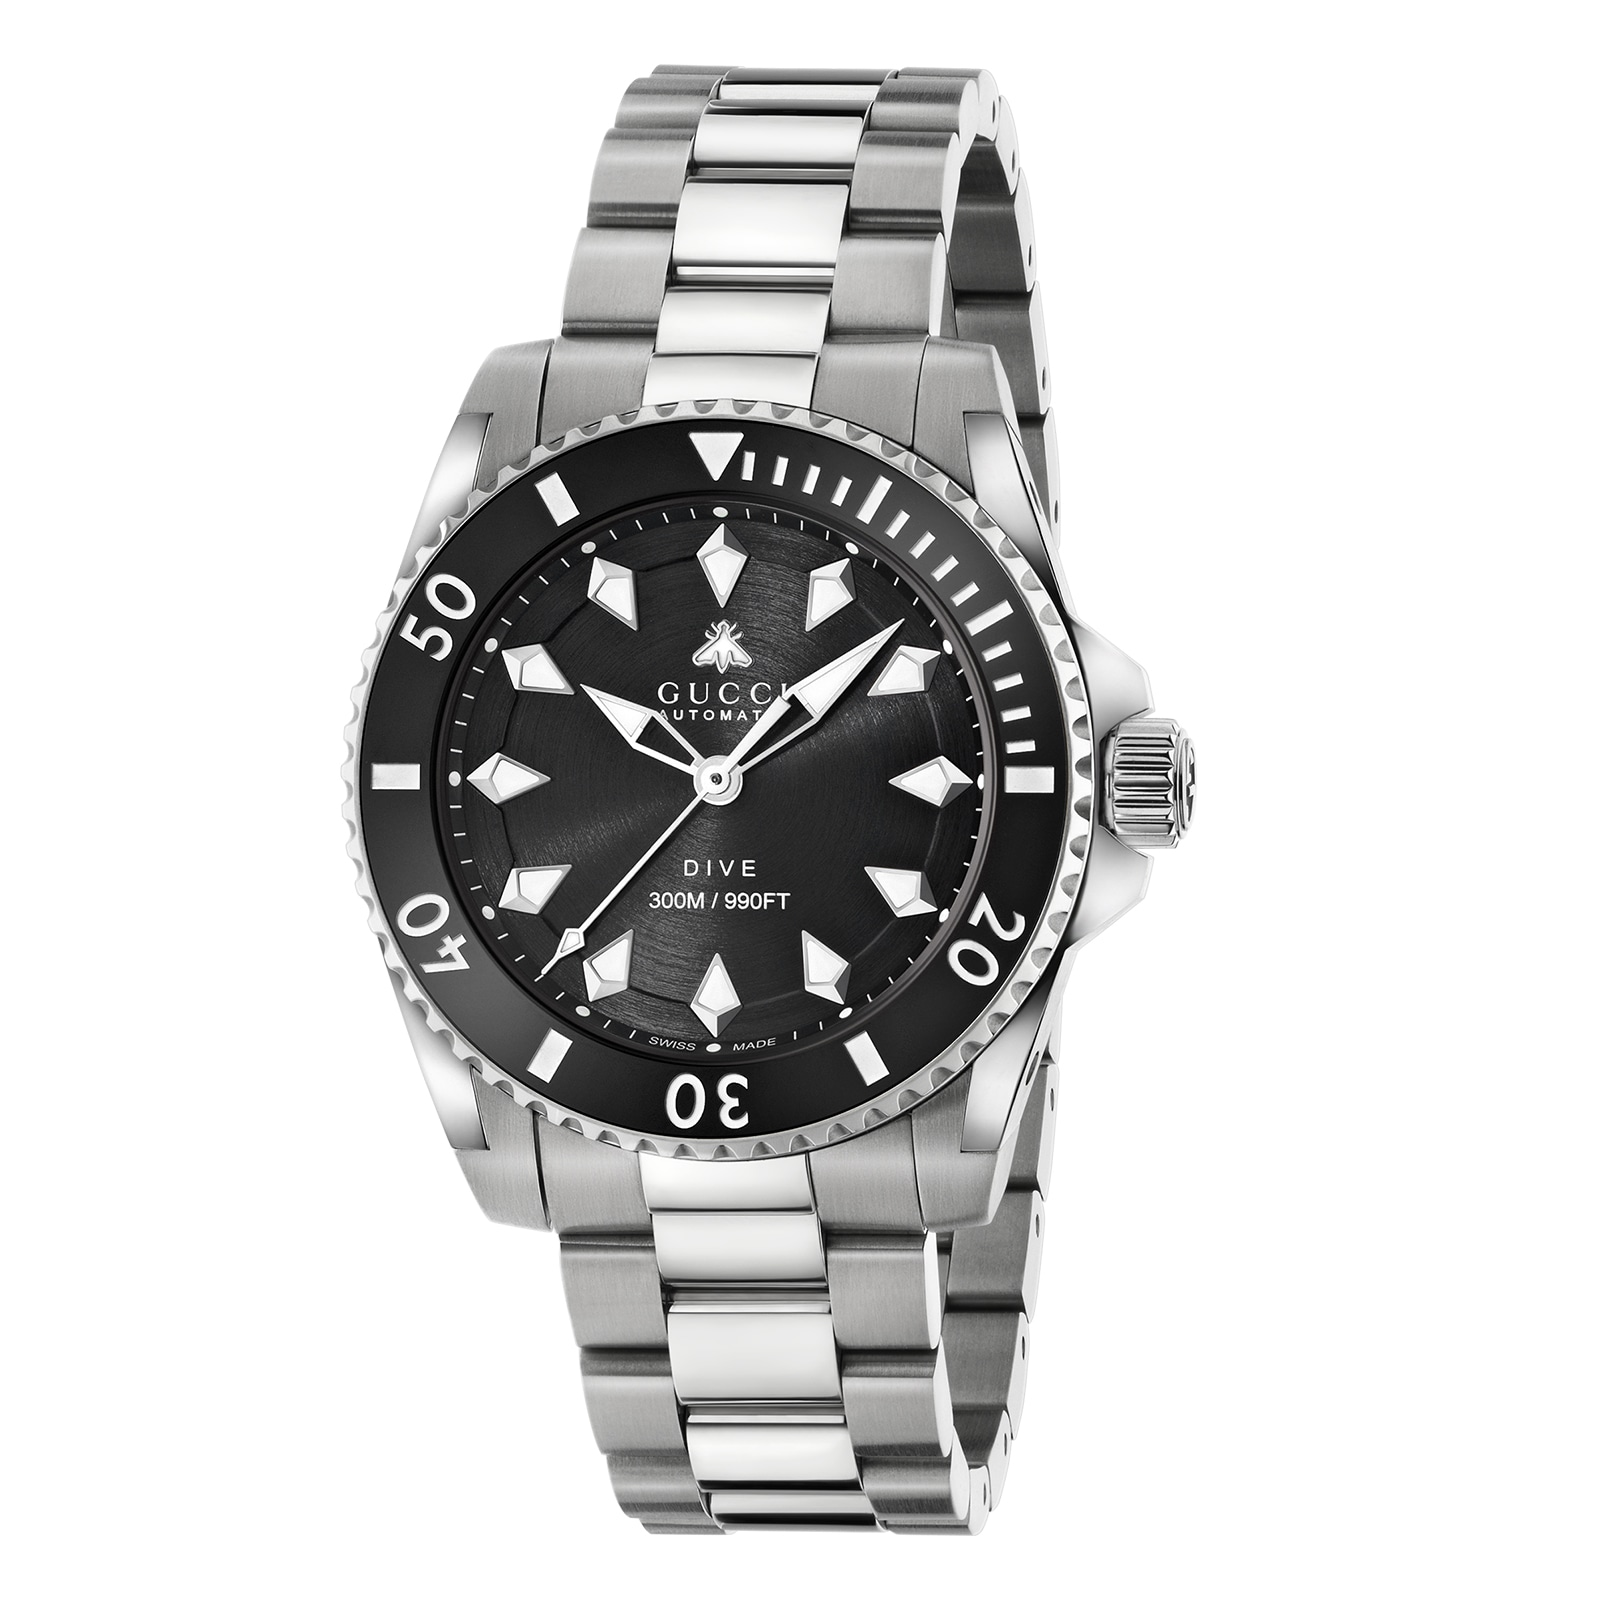 Dive watch, 40mm